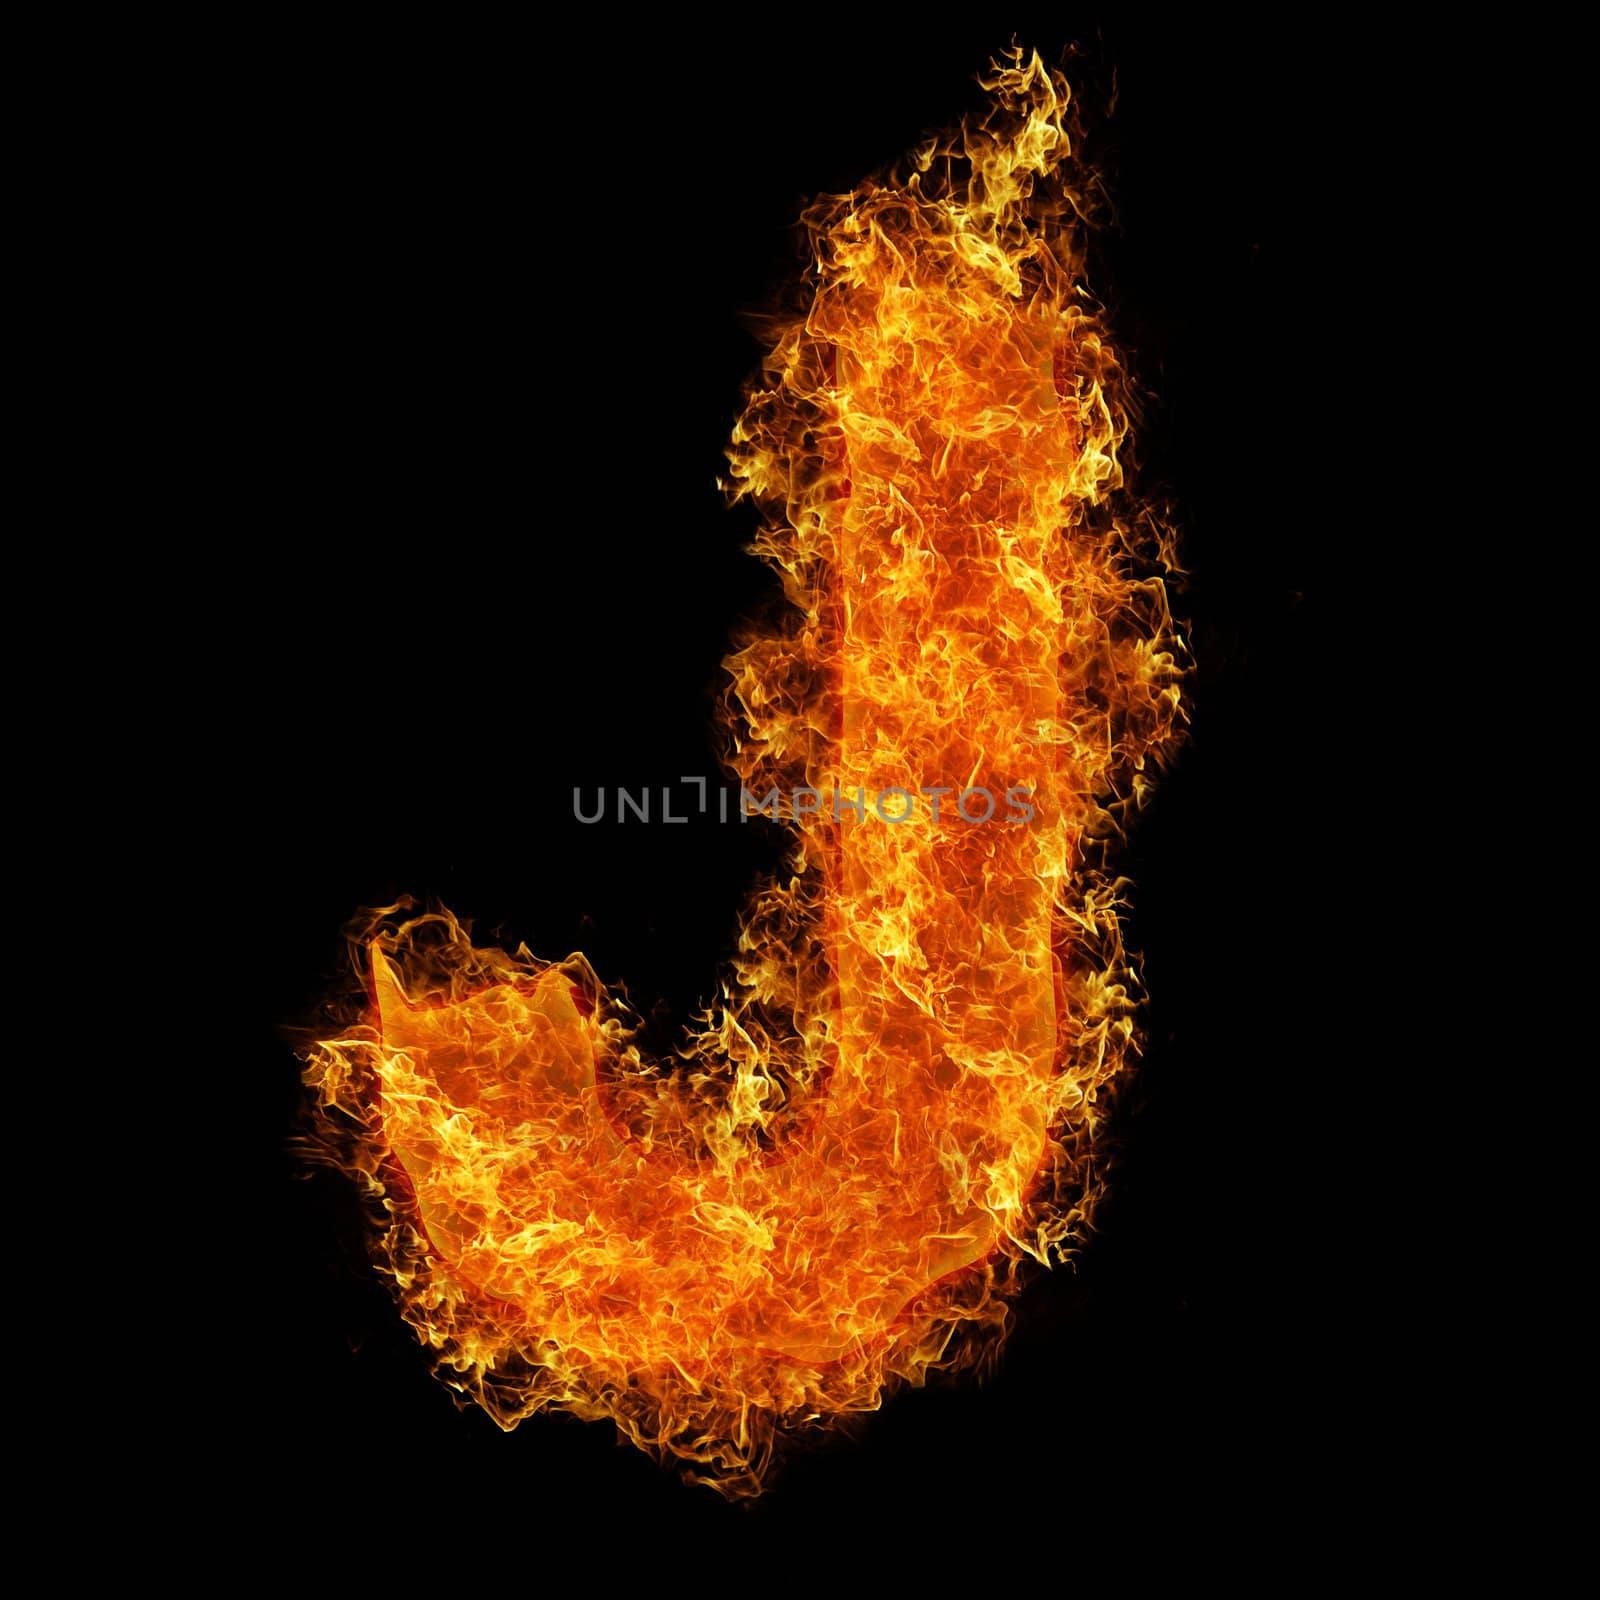 Fire letter J by rusak